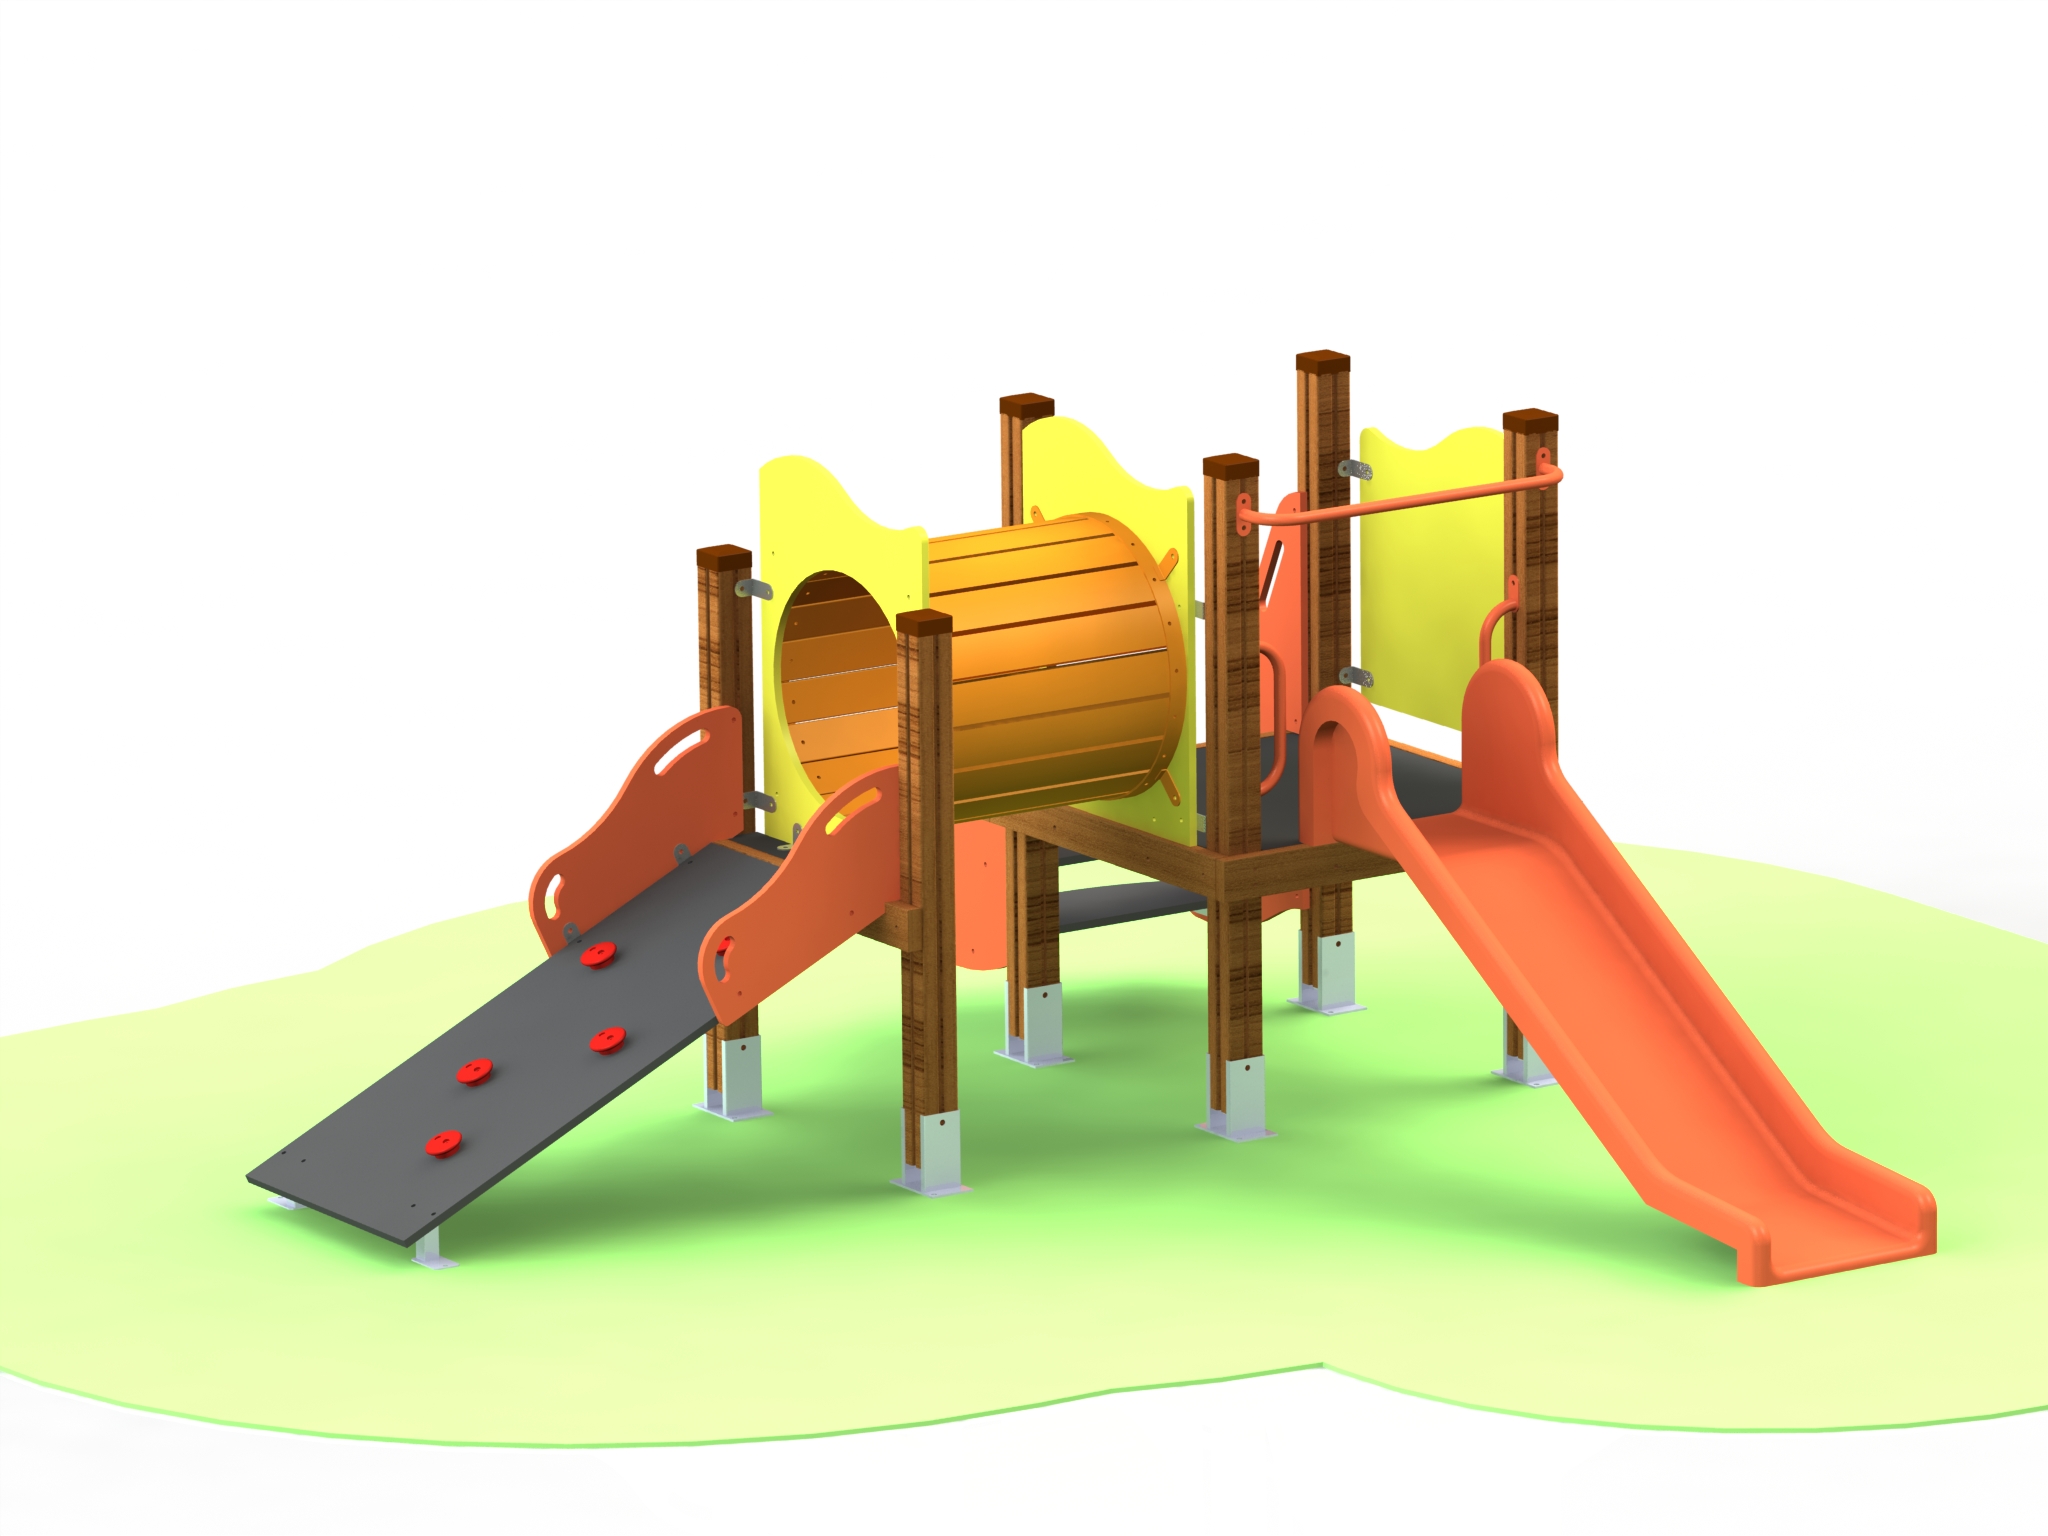 Combined playground equipment, model КД67